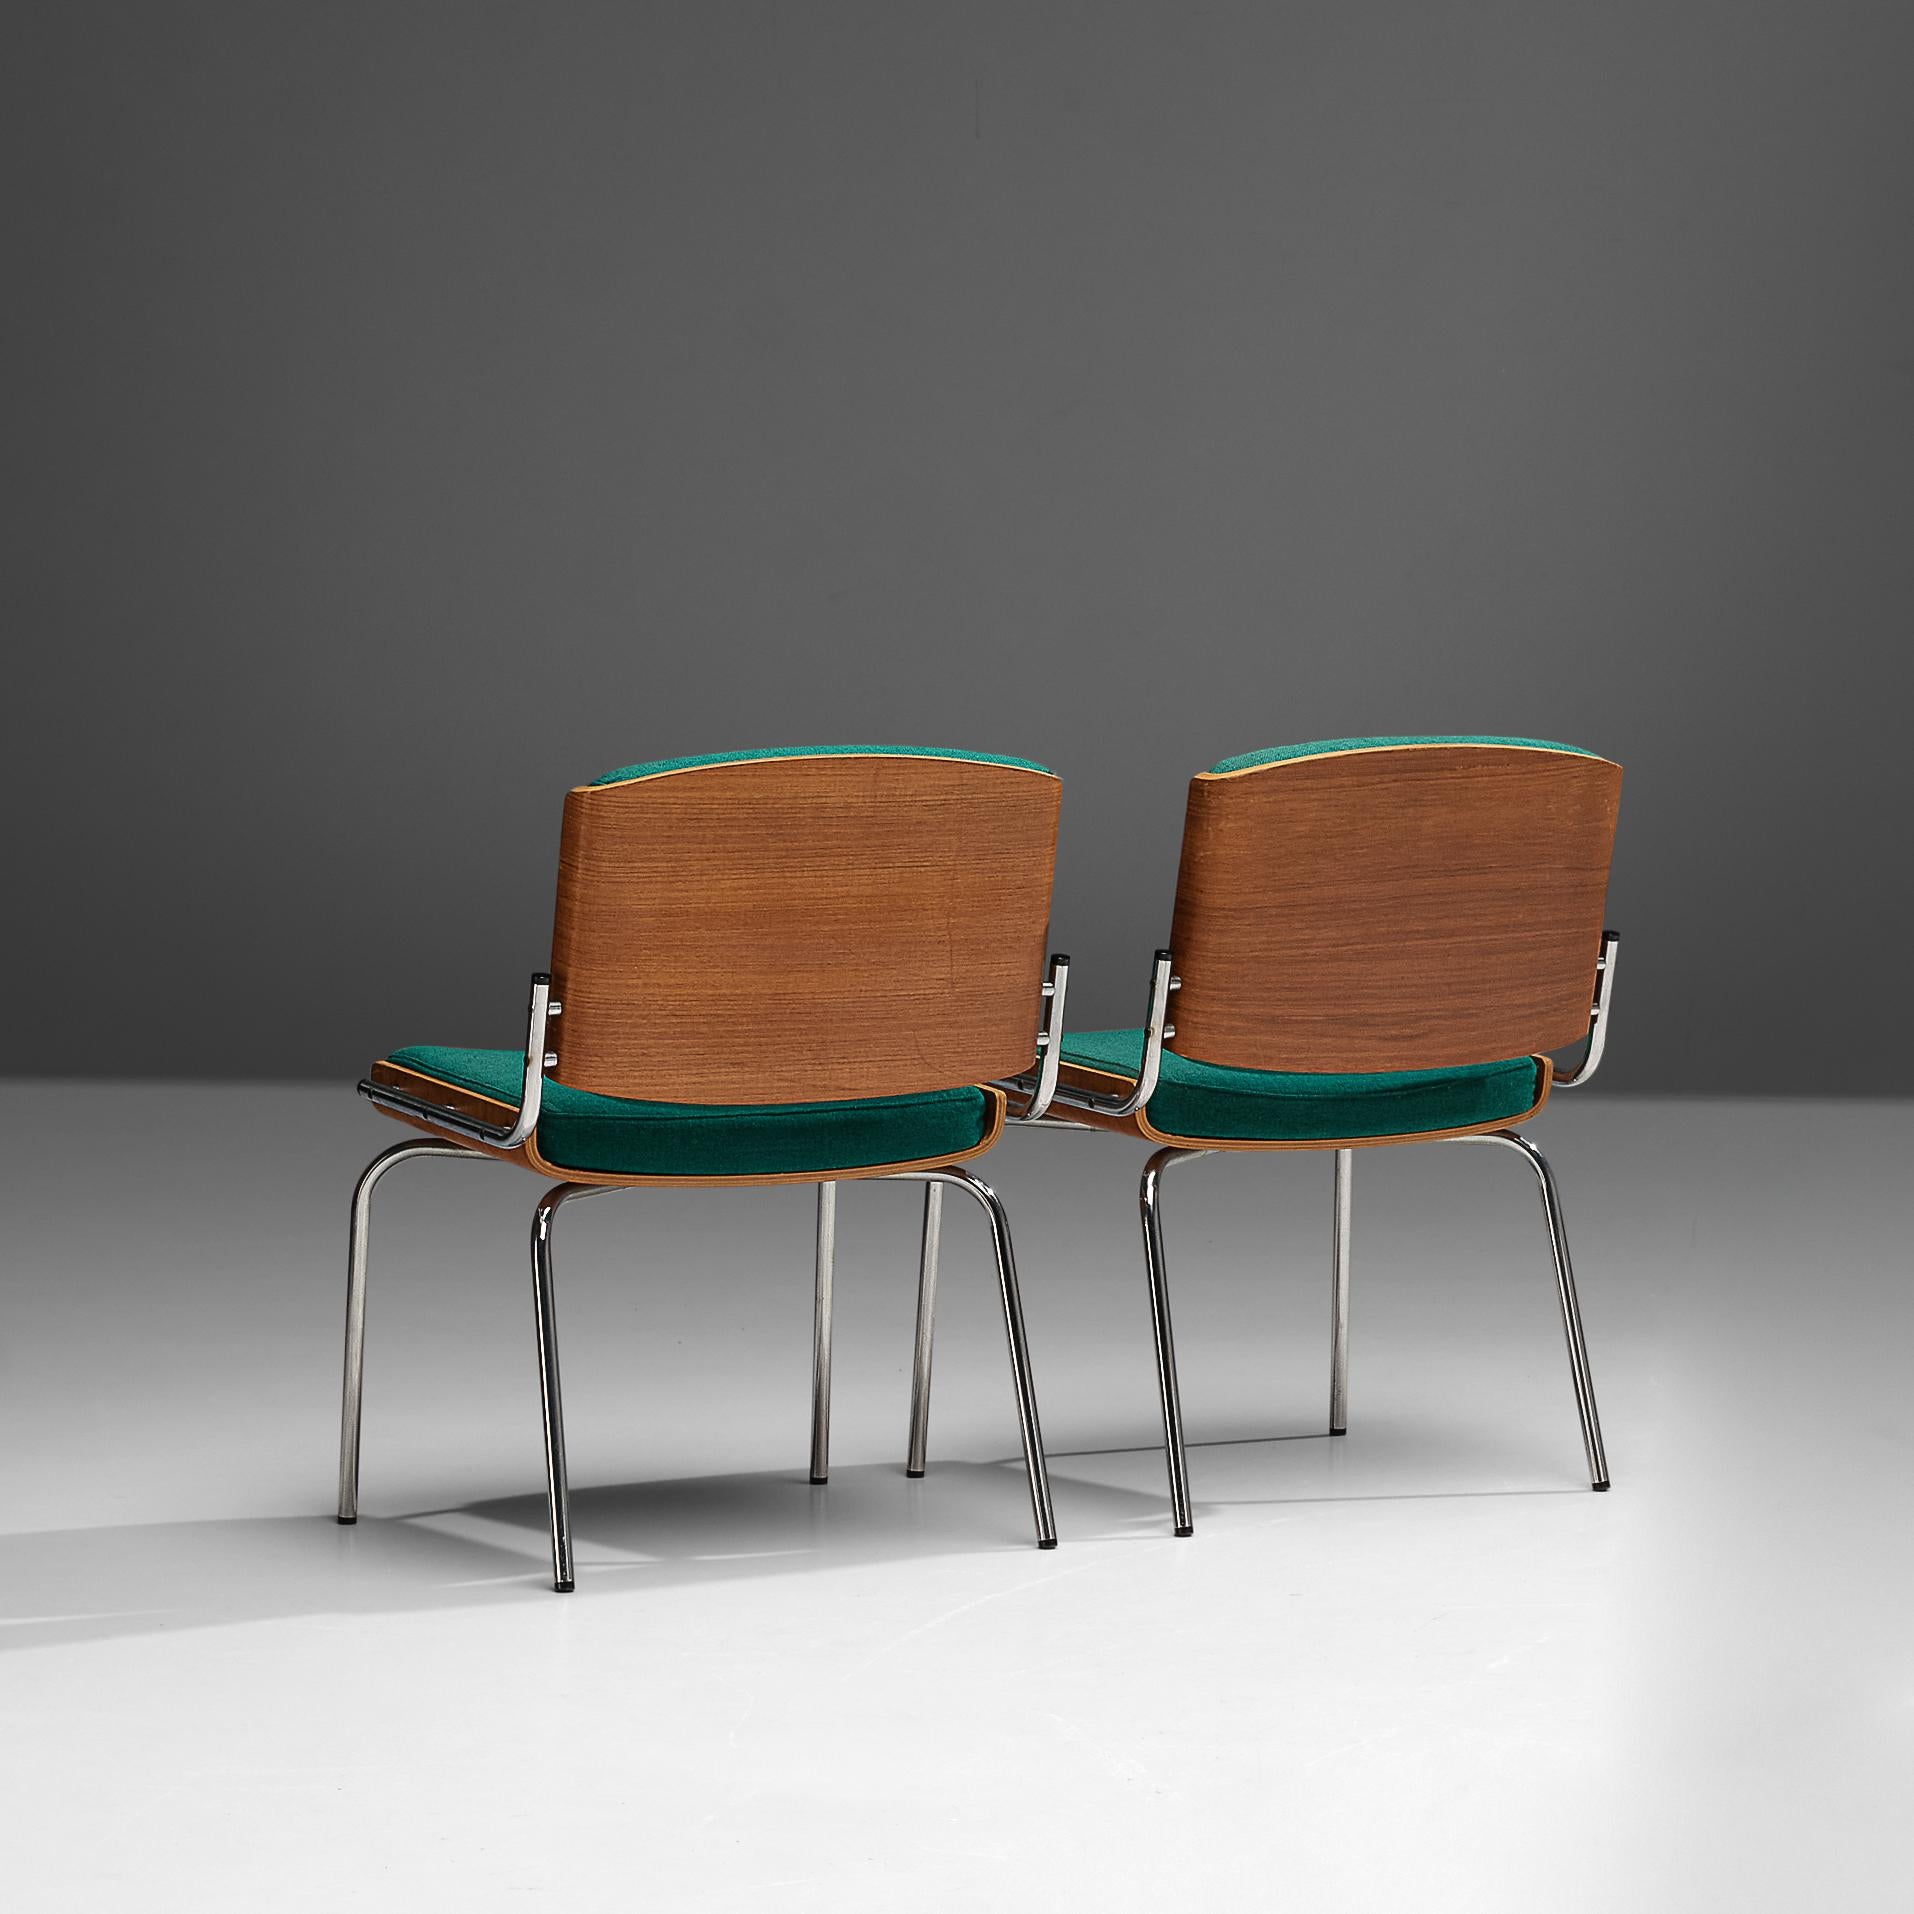 Scandinavian Modern Pair of Danish Chairs in Teak and Green Upholstery